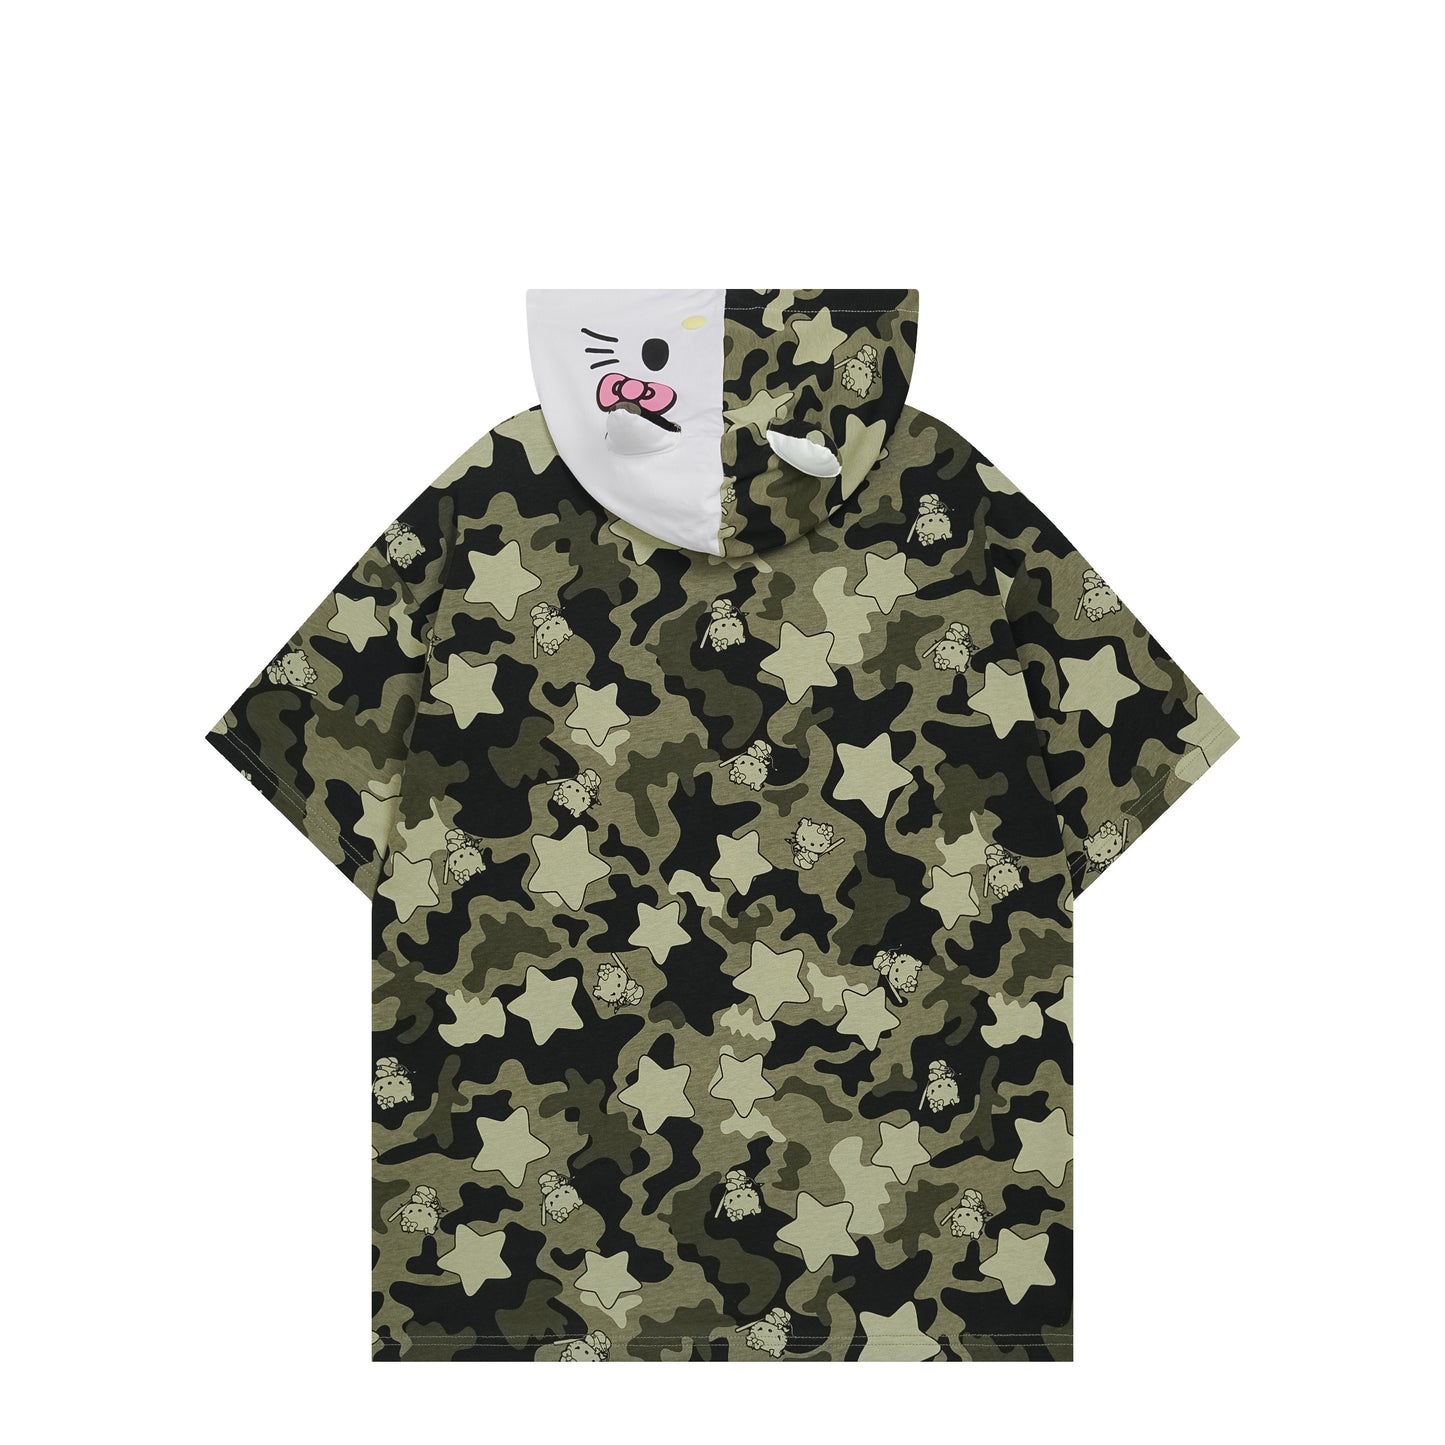 Hellokitty Camouflage Hooded Short Sleeve Tee Casual Summer T Shirt Top